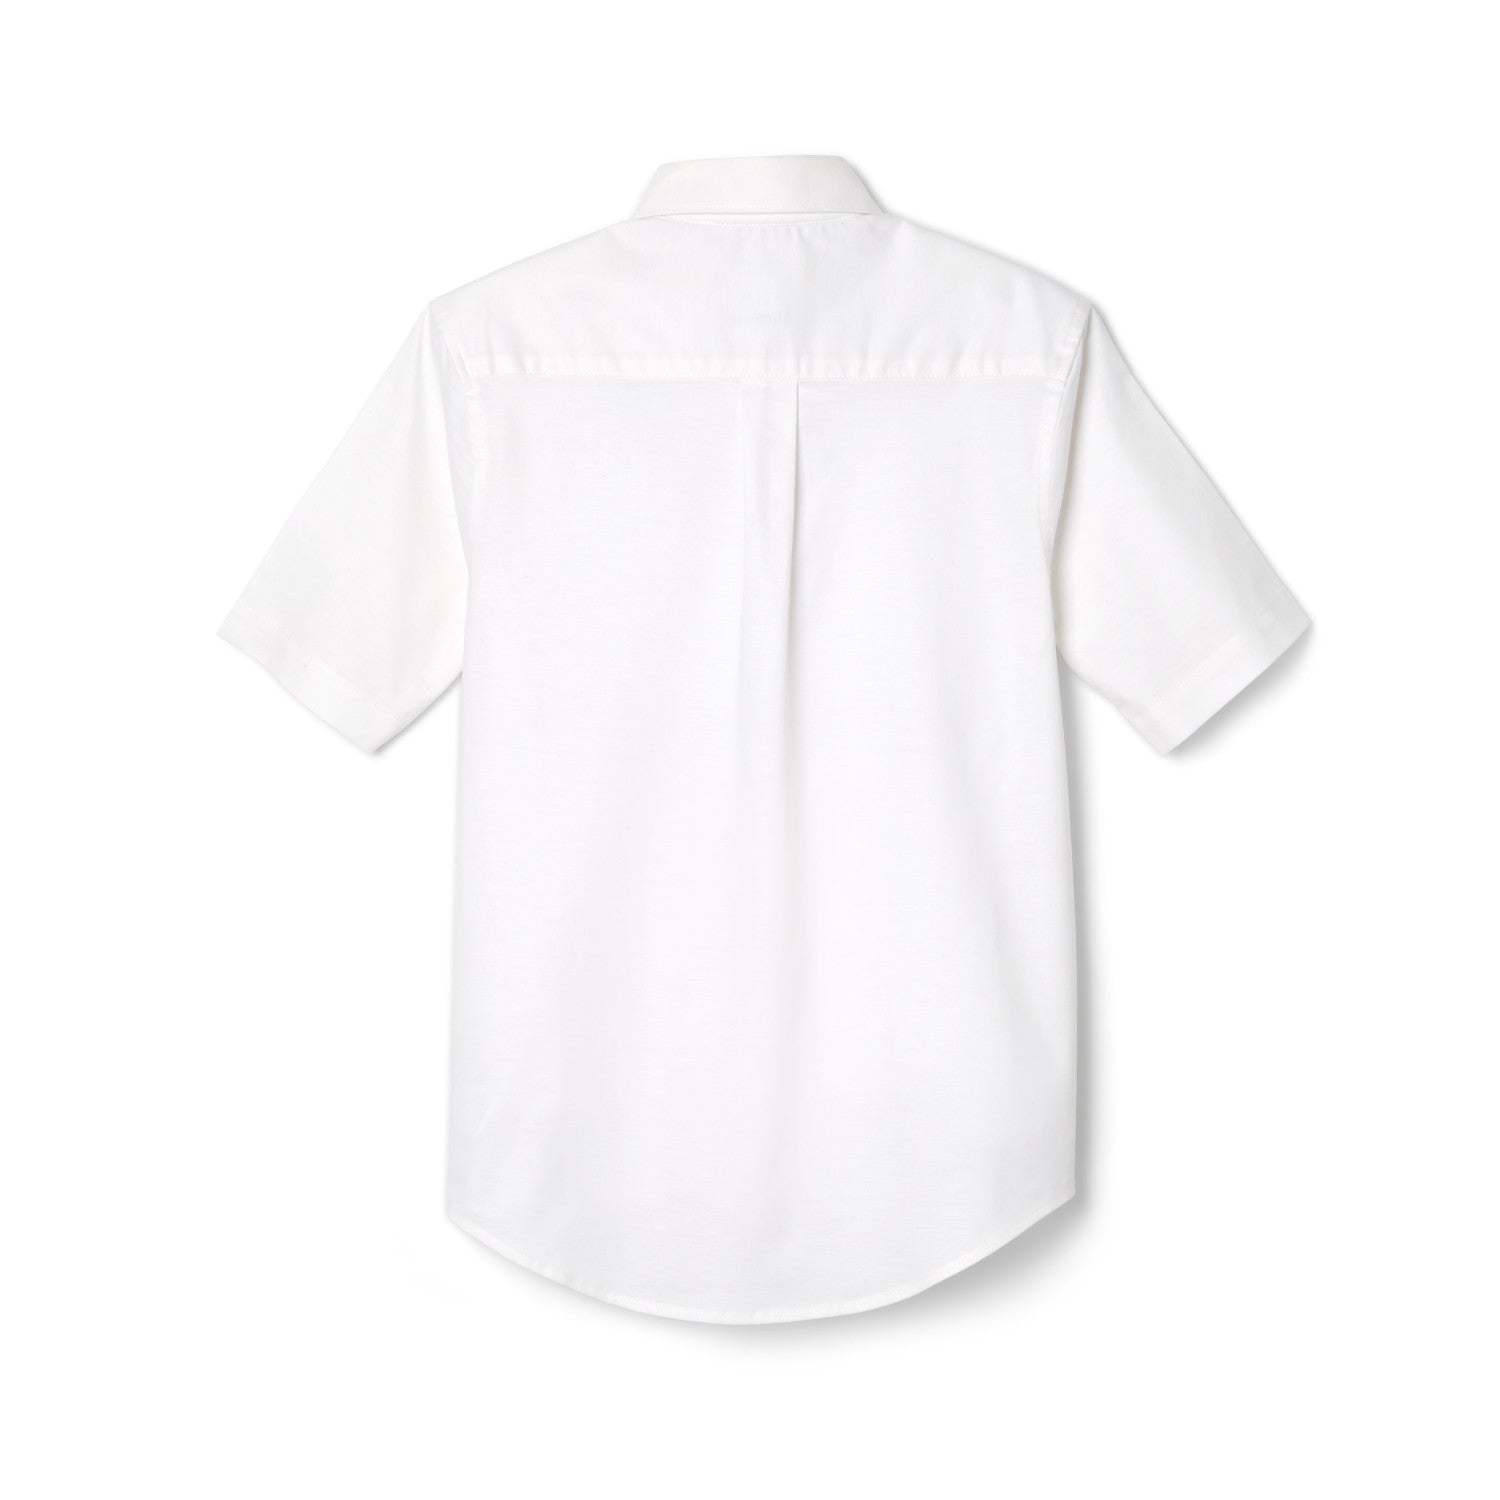 French Toast Boys 4-7 Short Sleeve Oxford Shirt